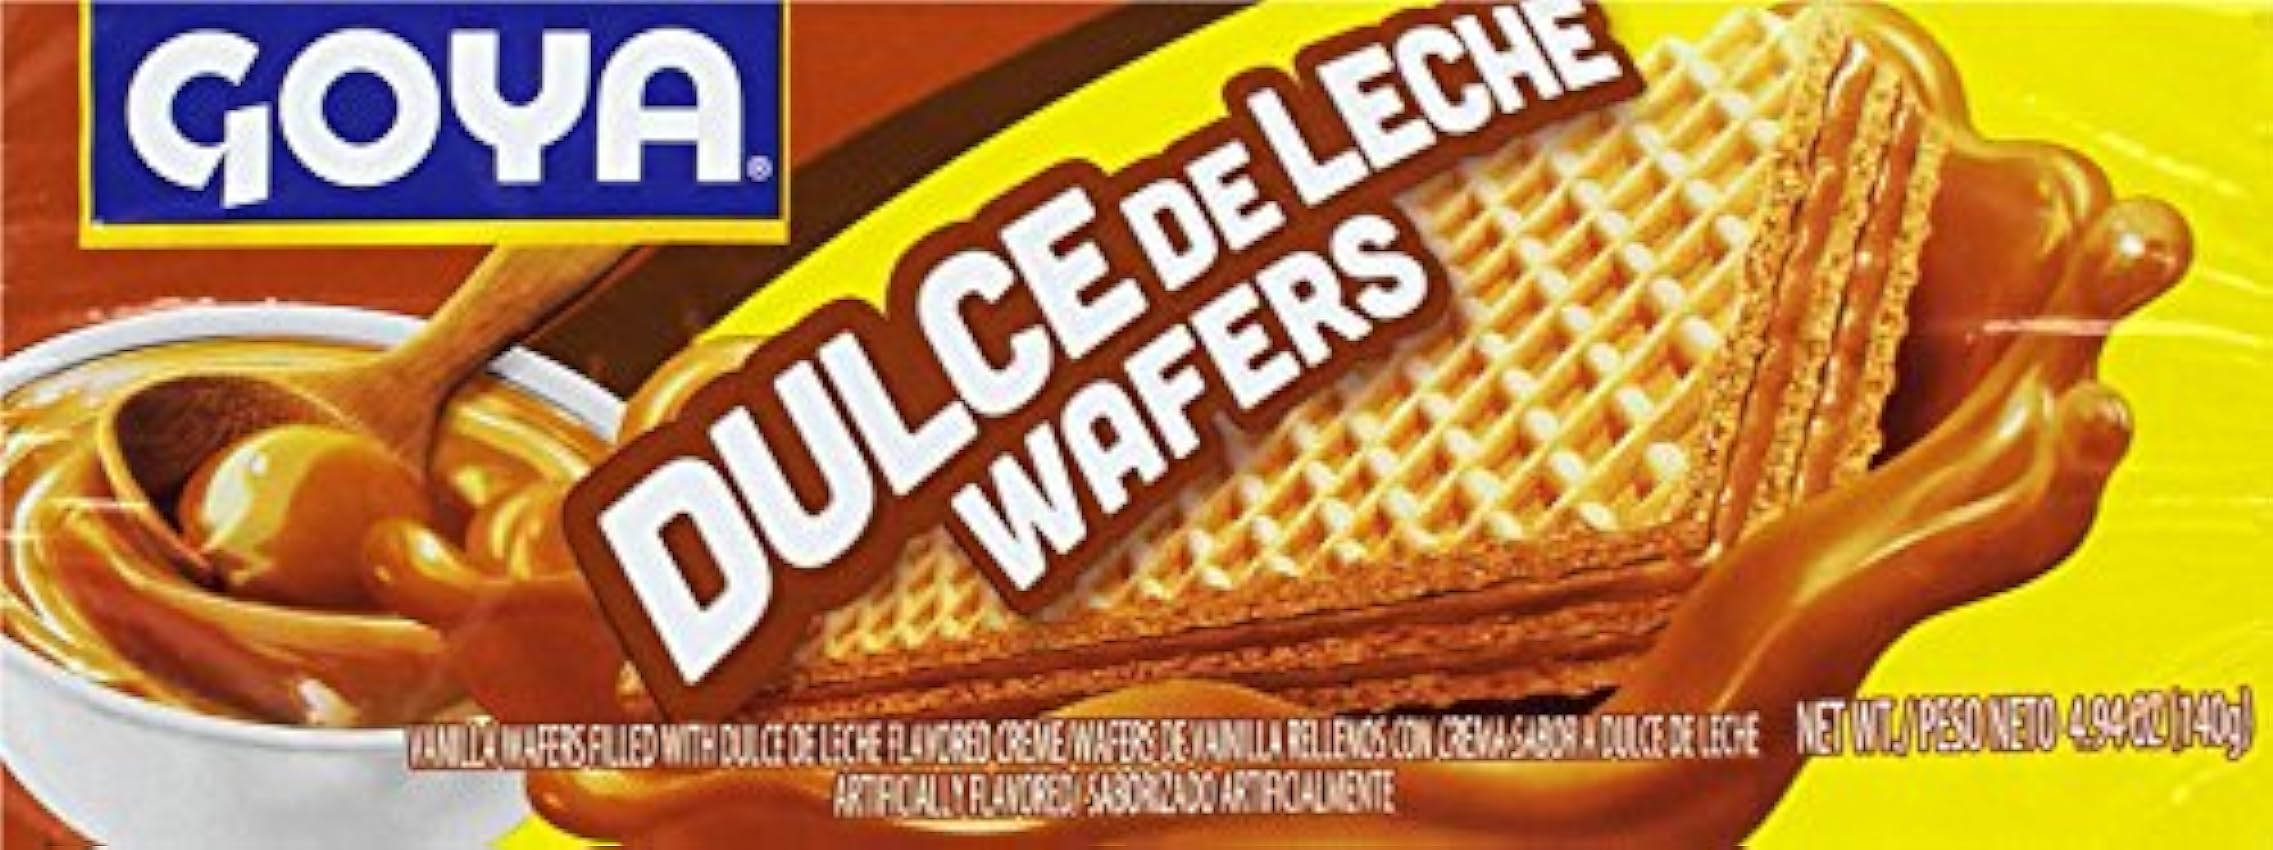 Goya Galletas Wafer Dulce de Leche - Paquete de 24 unidades lOj7TsrK